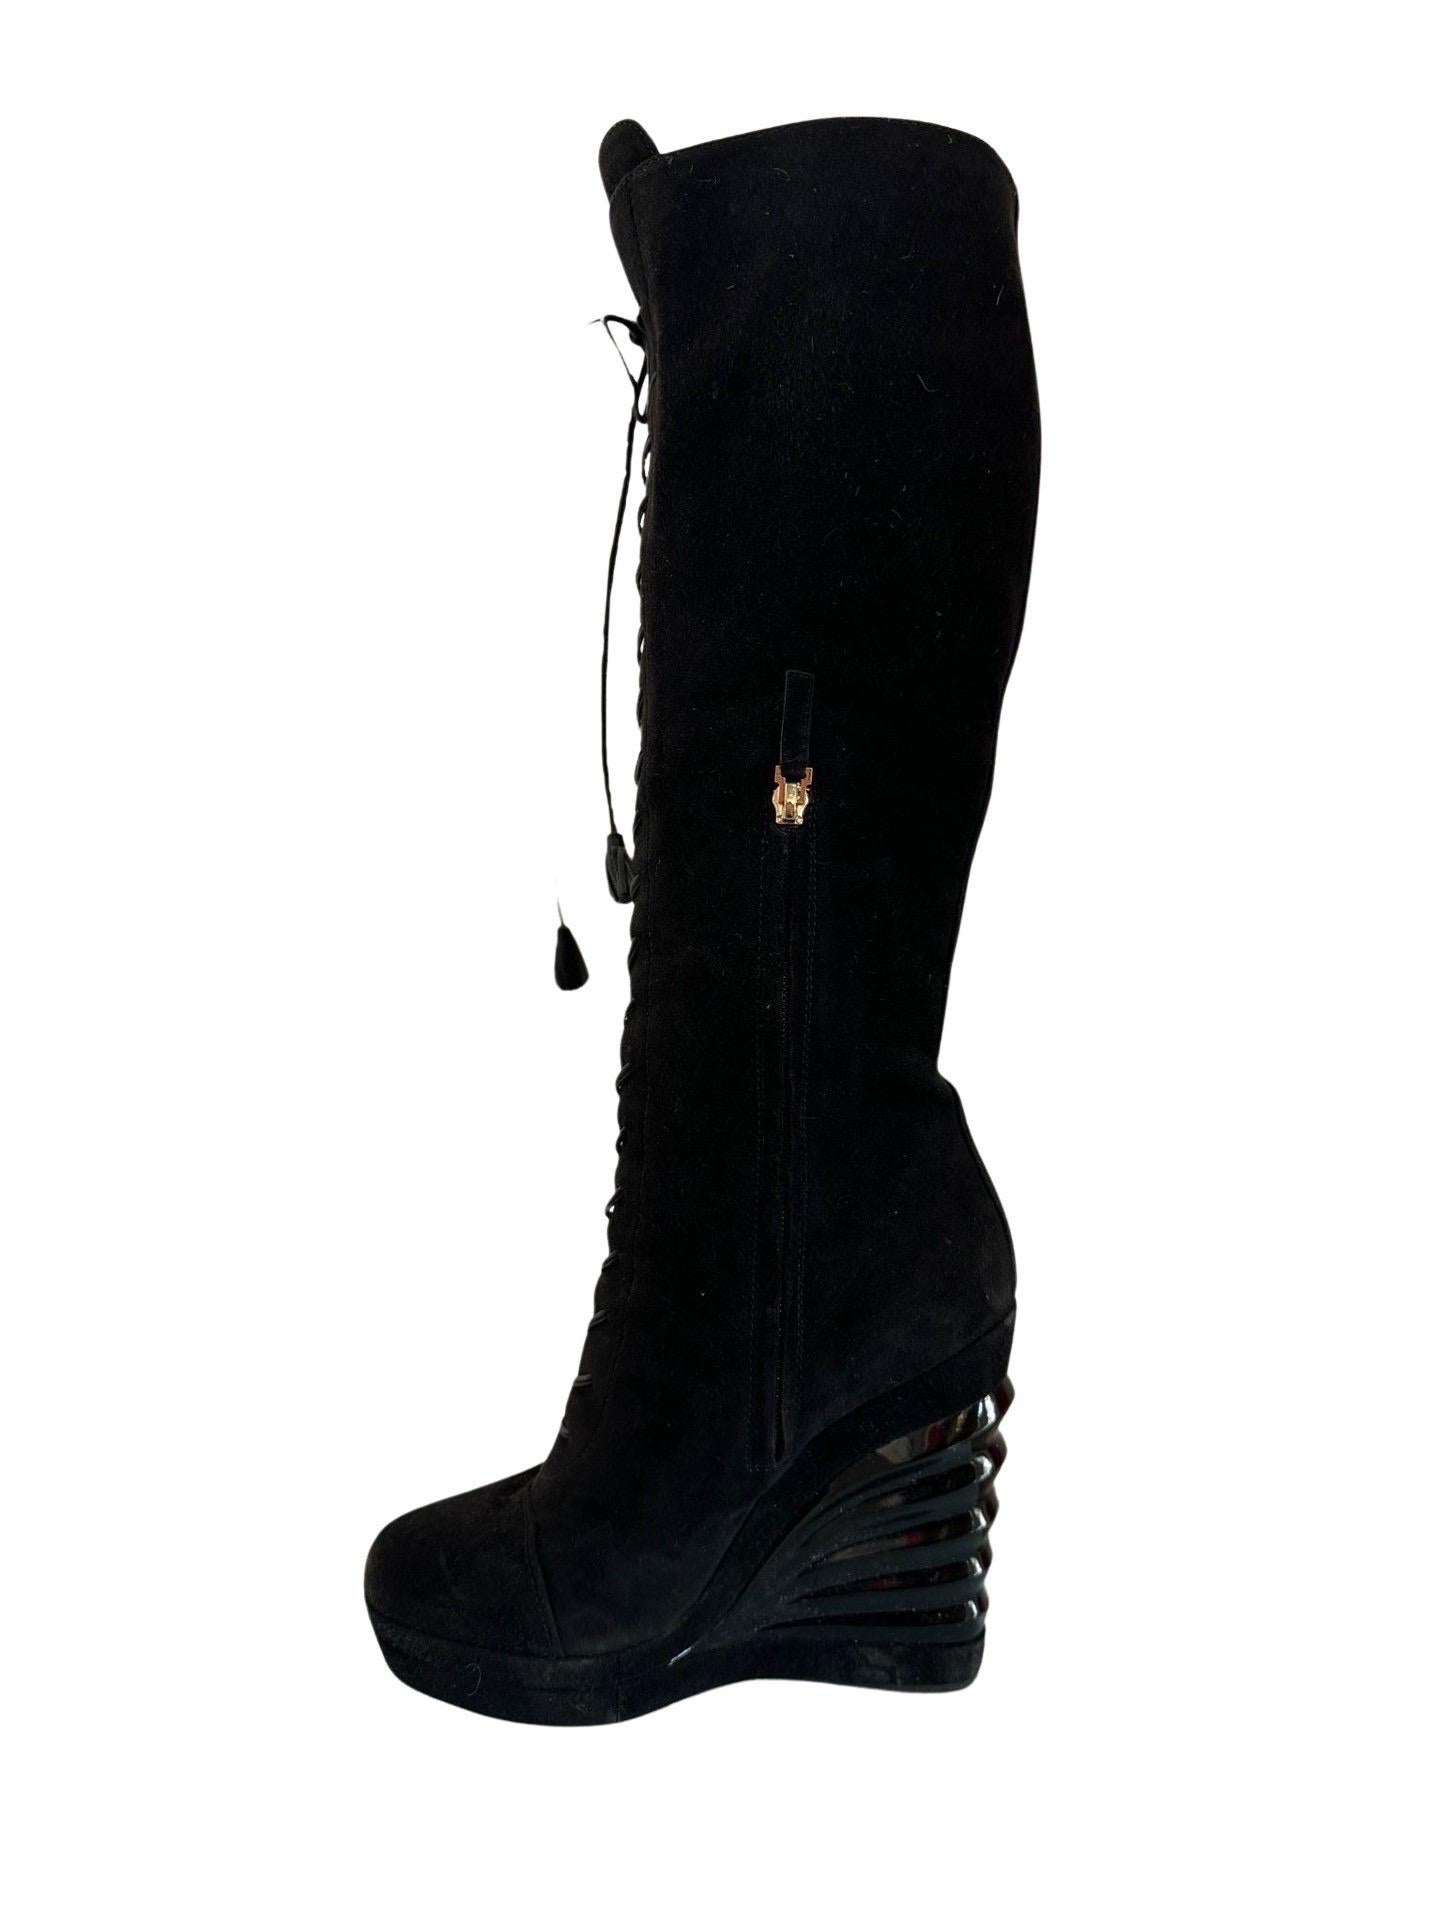 00s YSL Space Black Knee High Platform Boots 38.5 For Sale 5